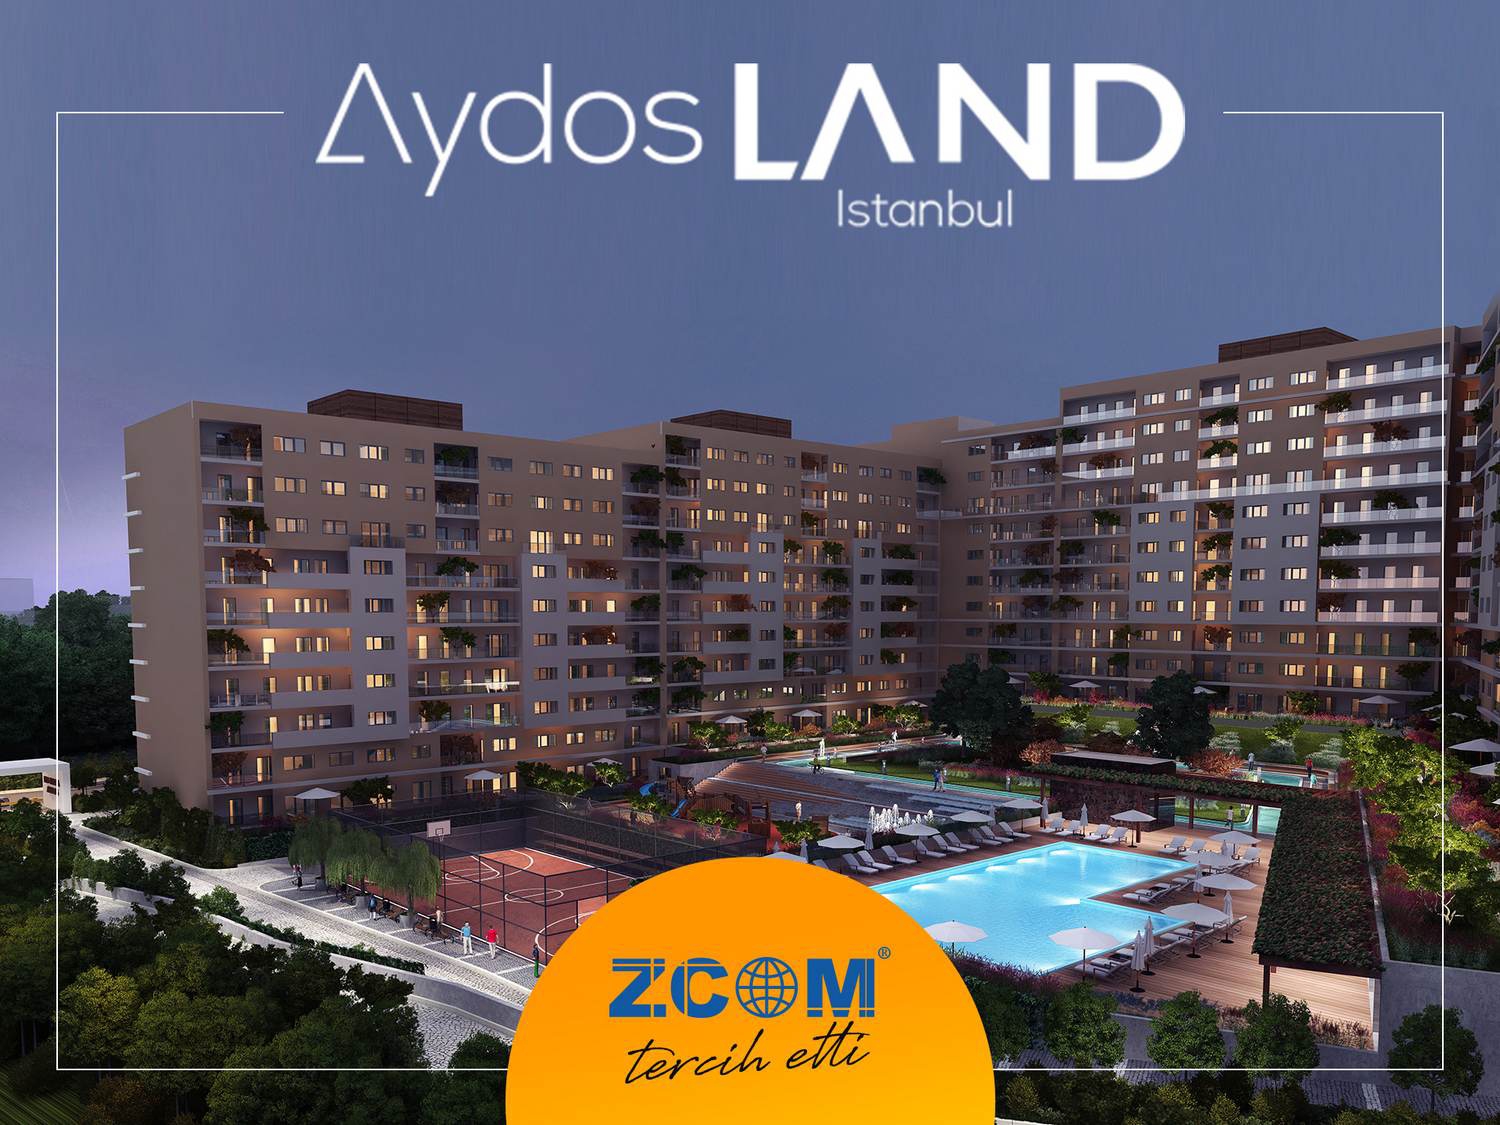 Aydos LAND İstanbul